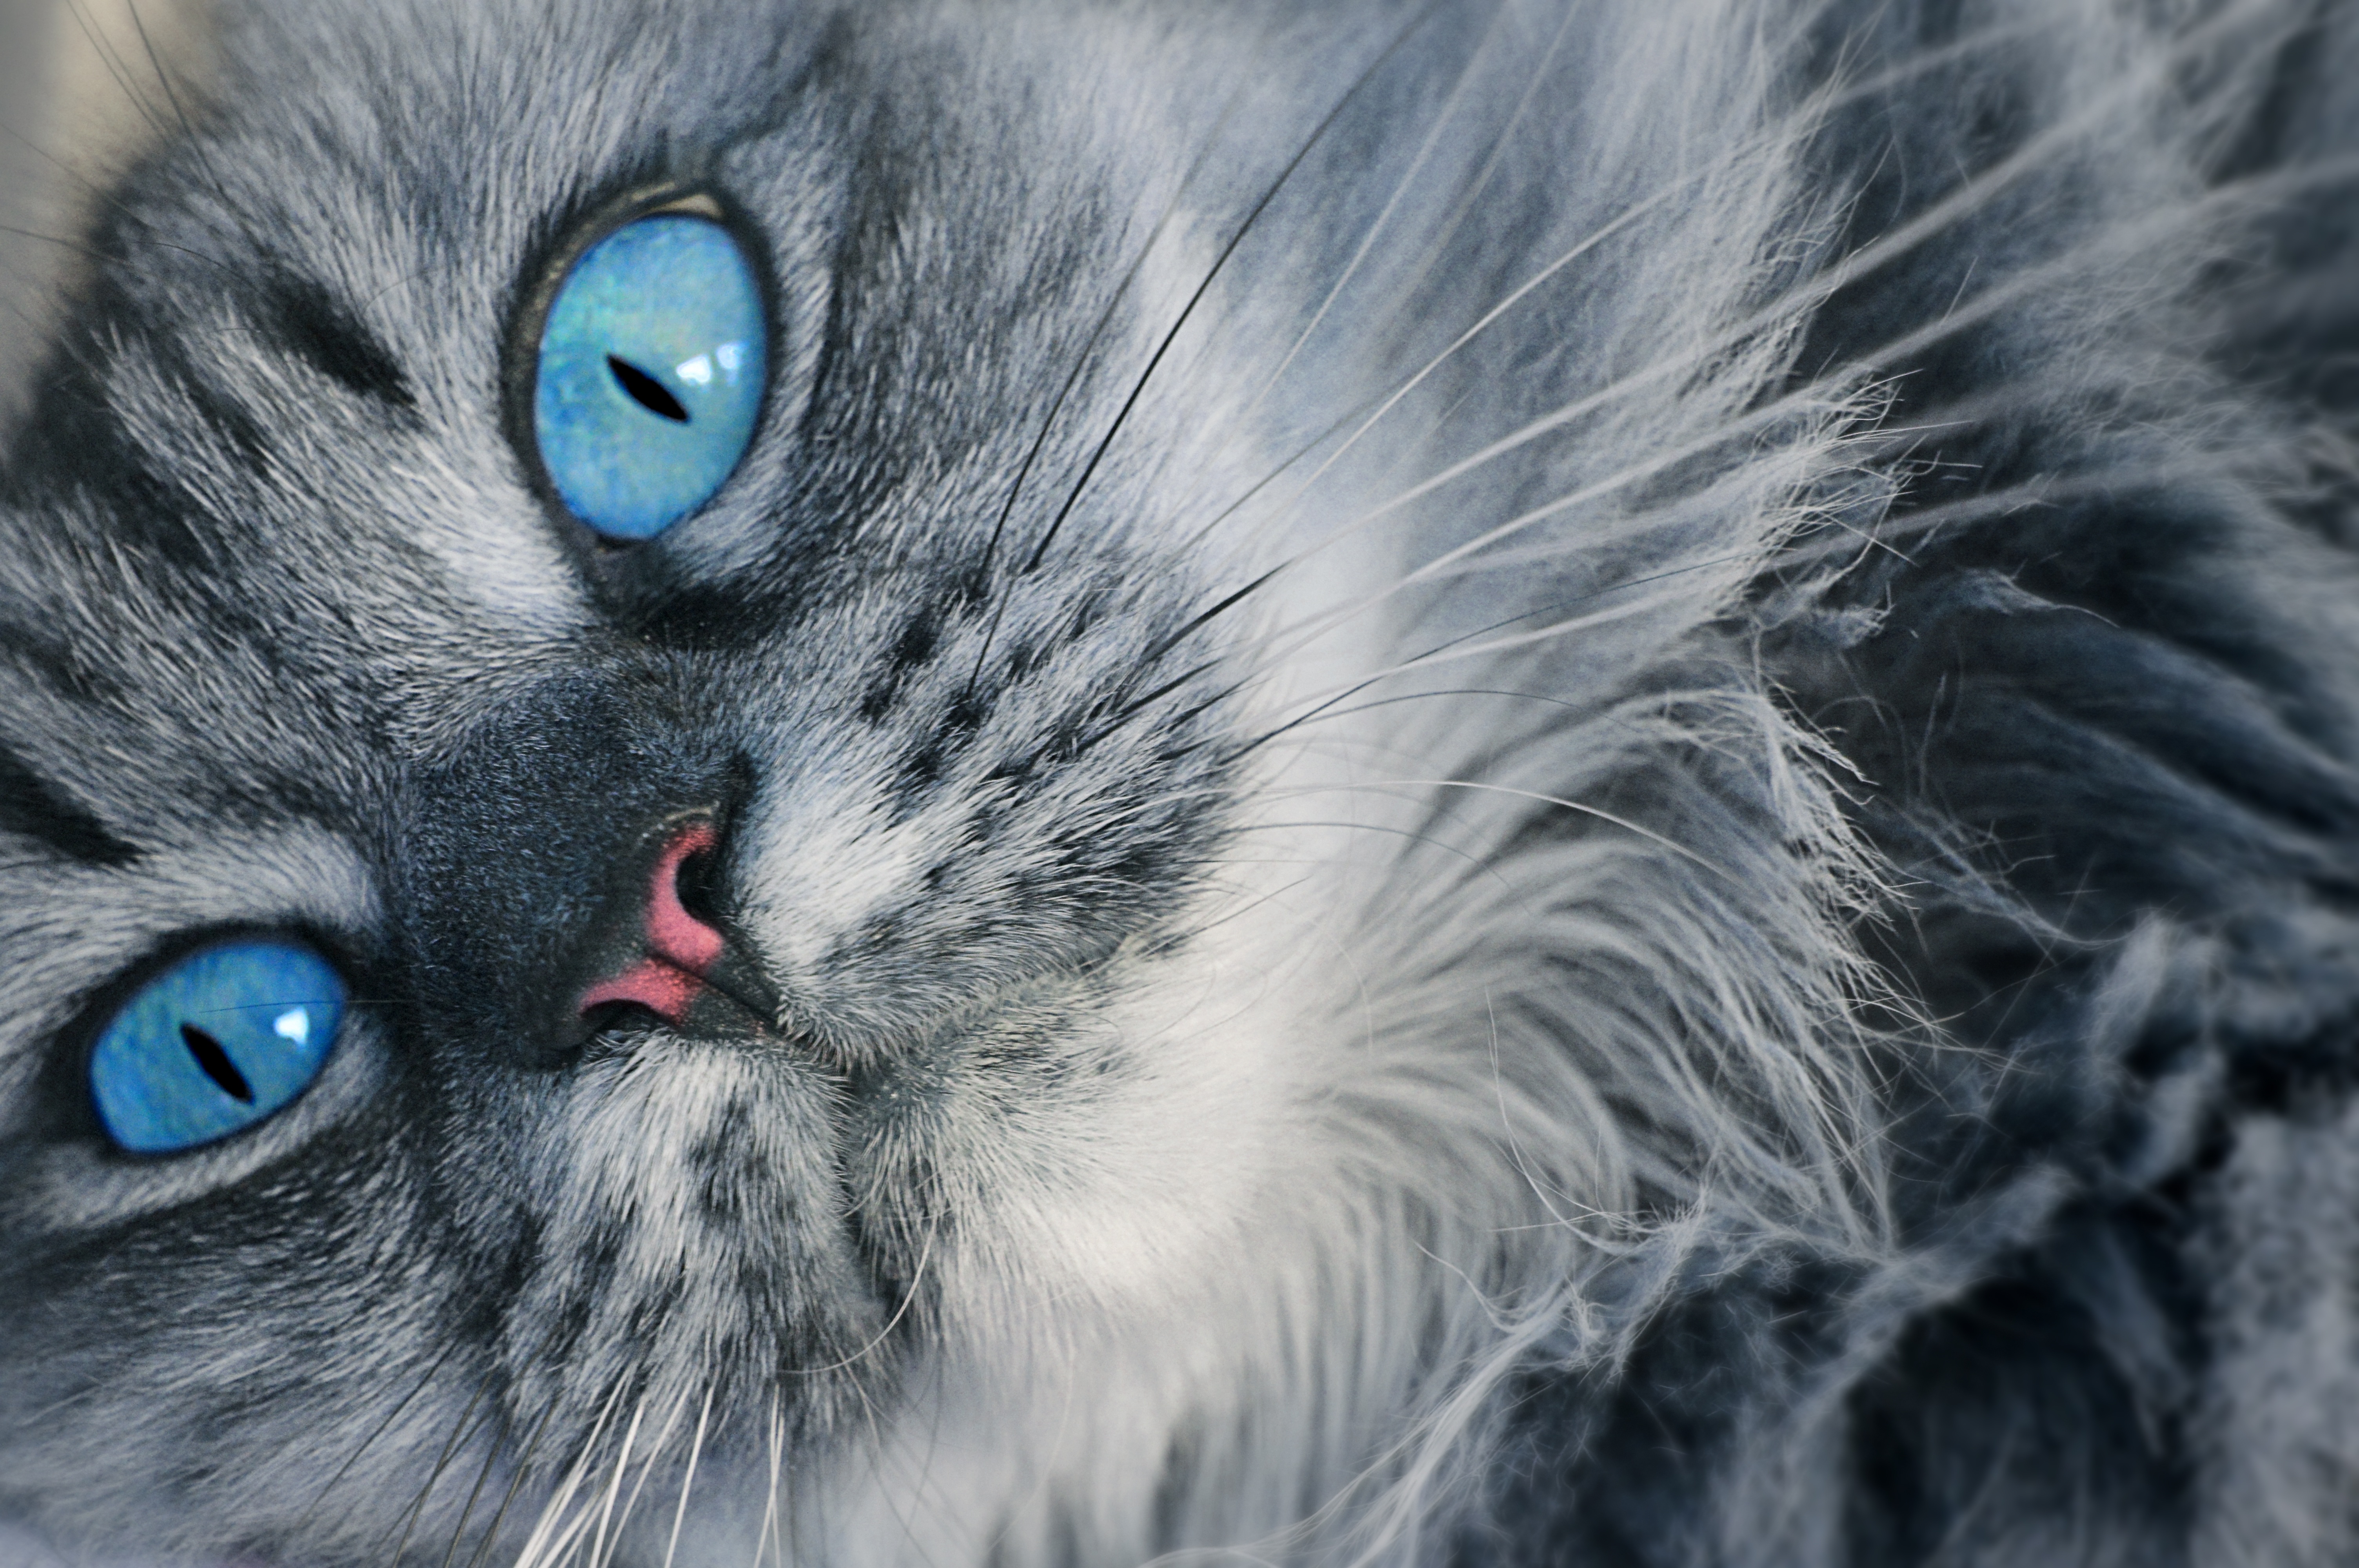 121731 descargar imagen animales, gato, esponjoso, peludo, bozal, ojos azules, de ojos azules: fondos de pantalla y protectores de pantalla gratis